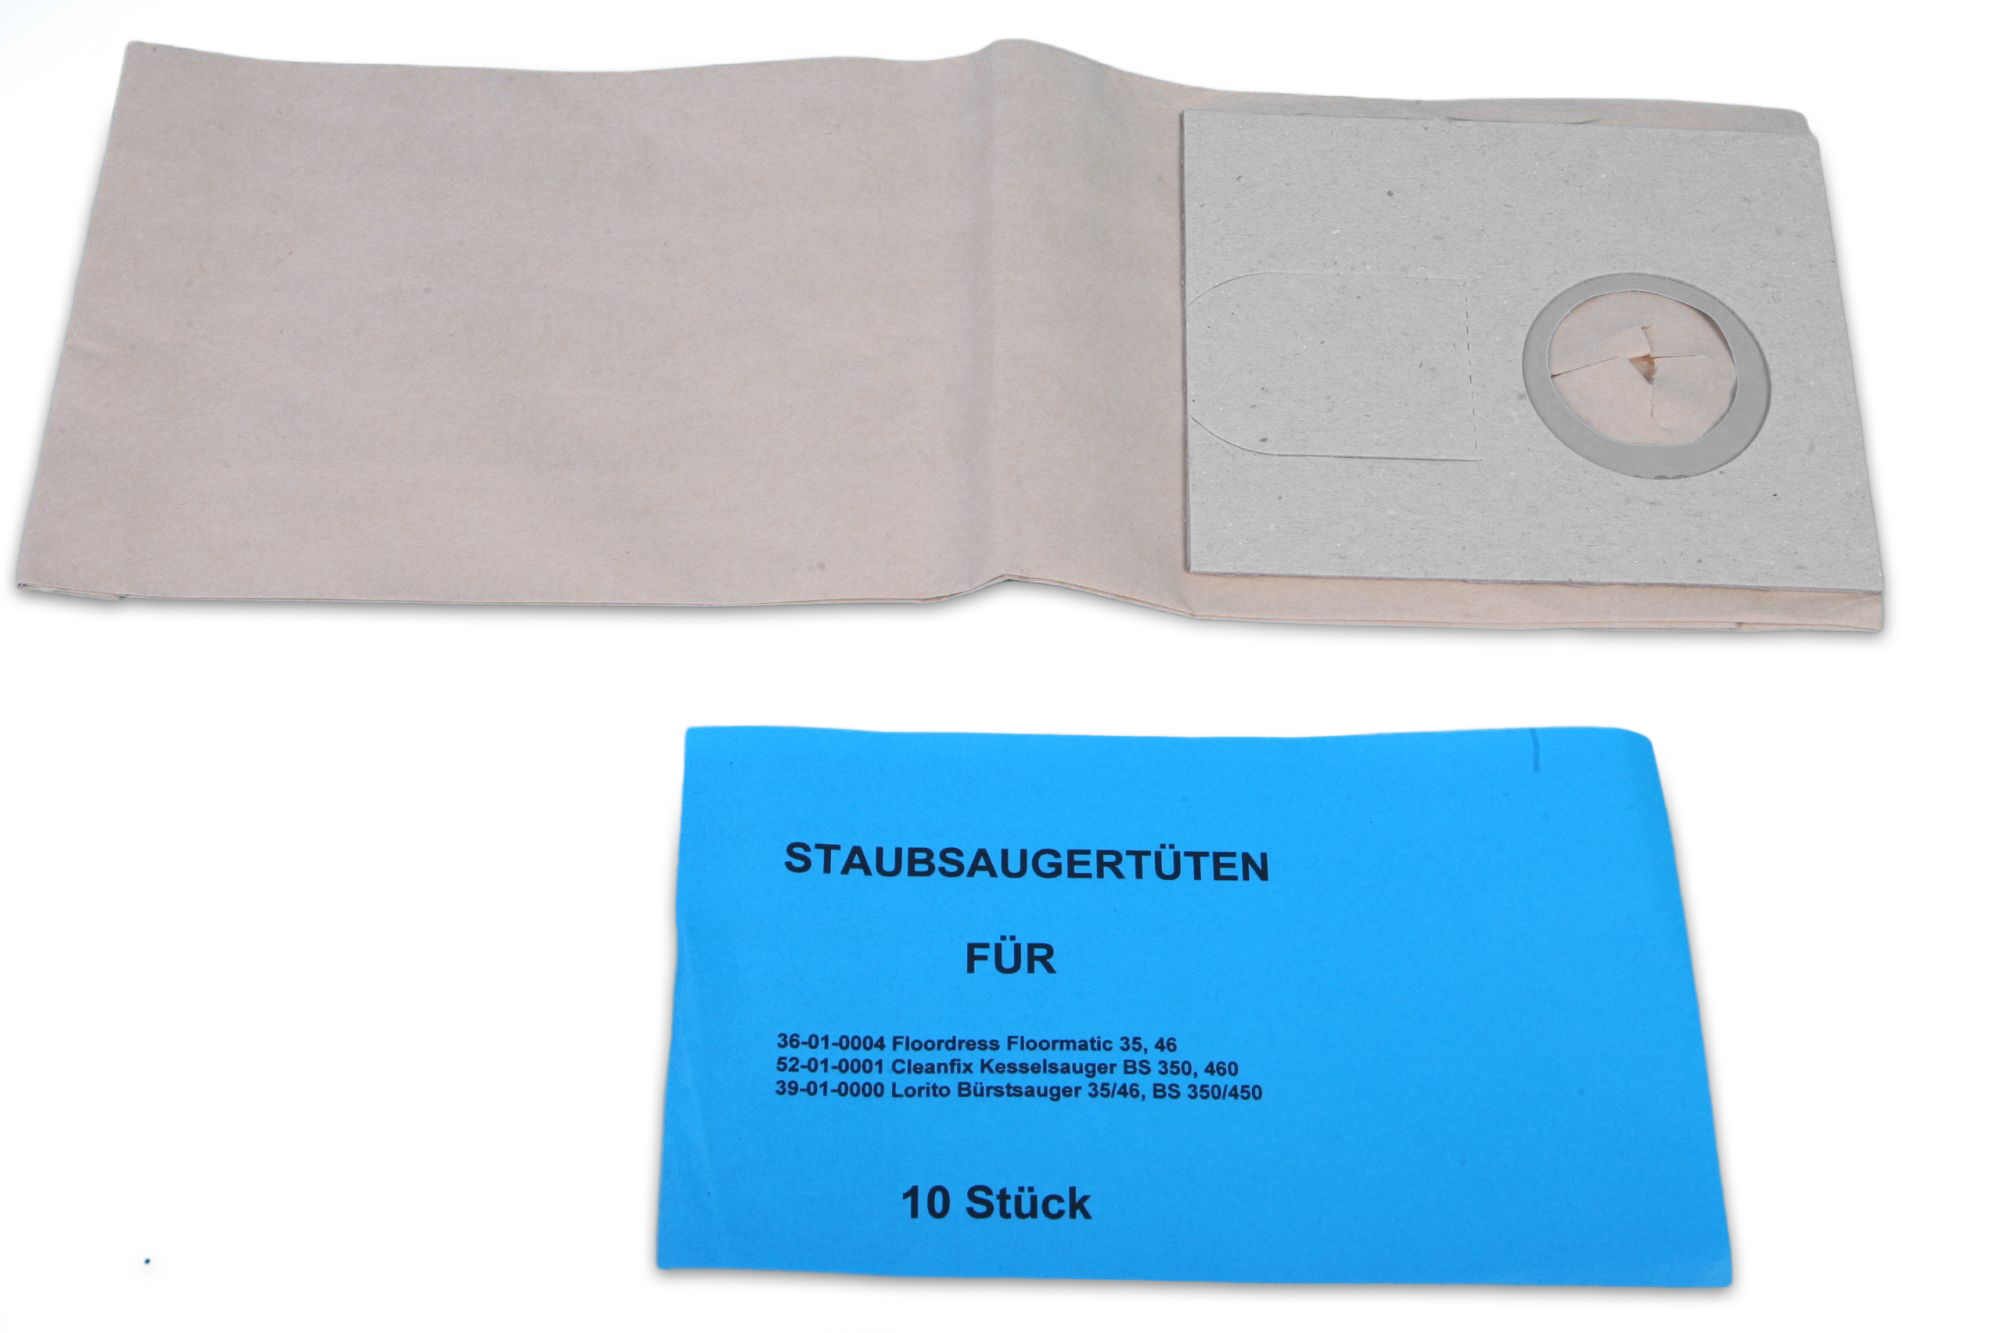 STAUBSAUGERLADEN.DE 10 Staubbeutel passend Staubsauger für Floordress, Cleanfix, Lorito Staubsaugerbeutel